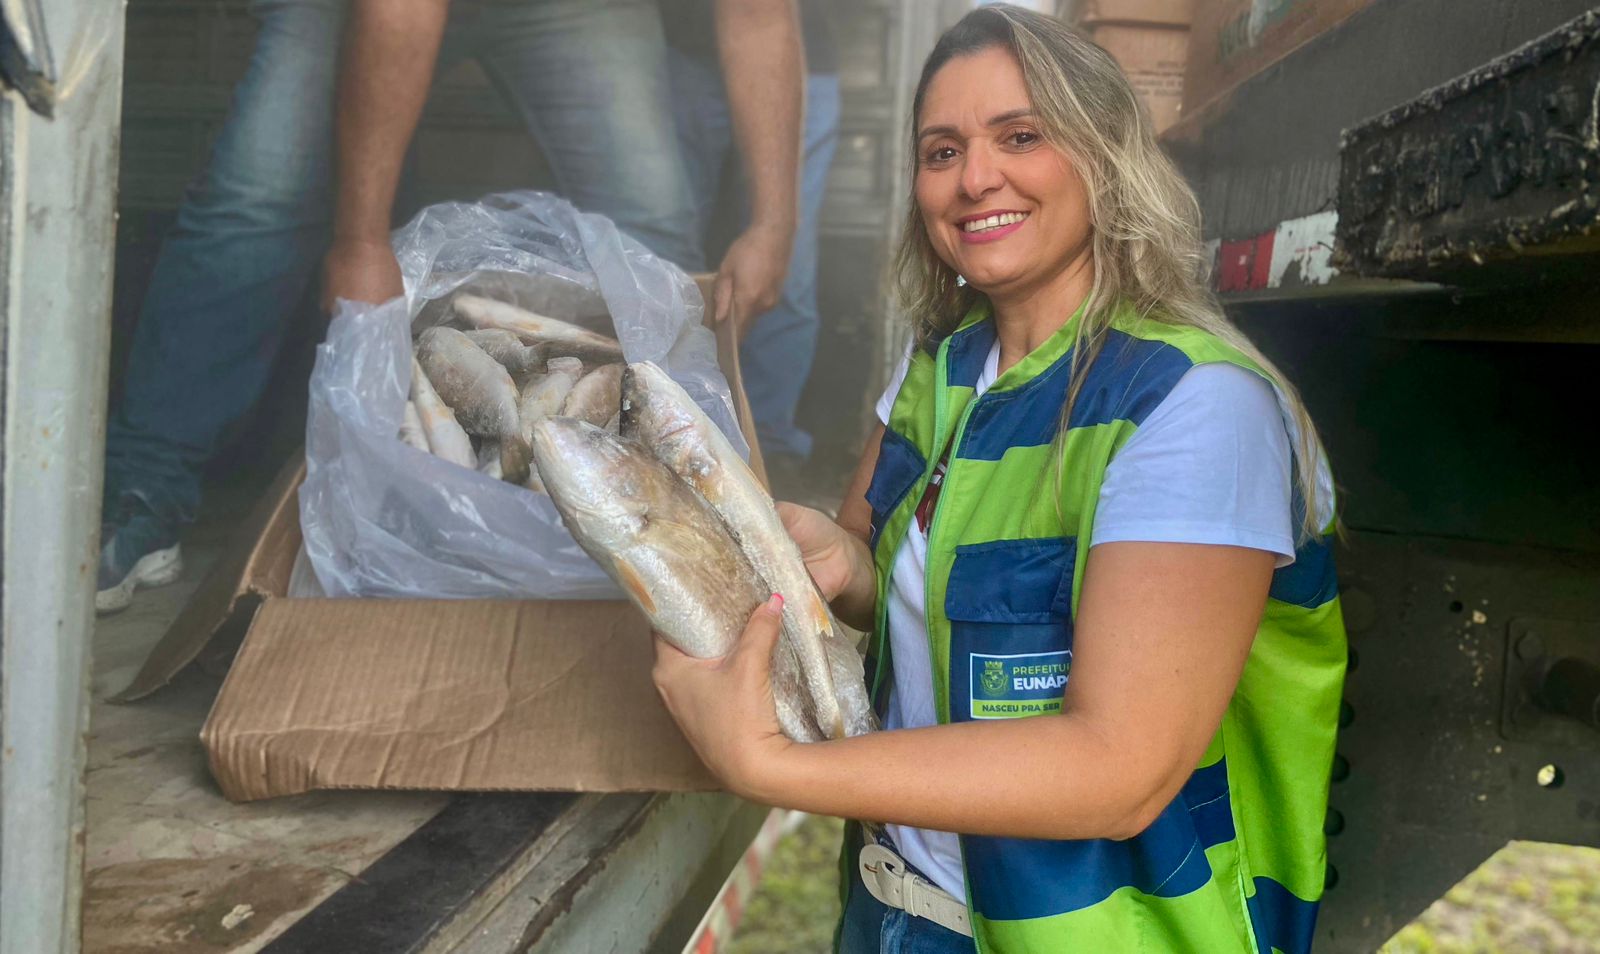 18 mil quilos de peixes entregues: Prefeita Cordélia bate recorde na distribuição de peixes na Semana Santa pelo 3º ano consecutivo 17